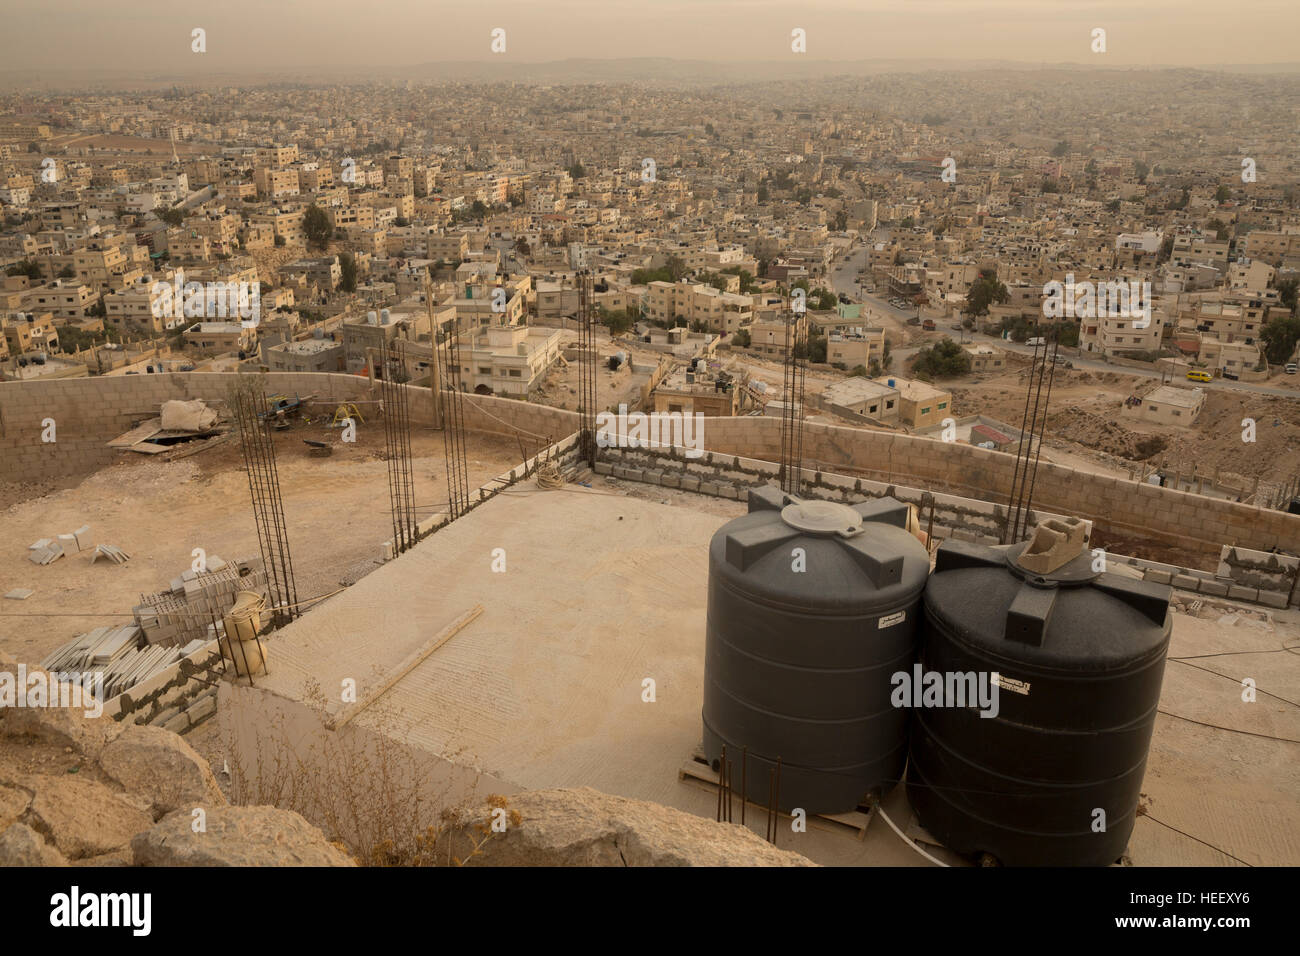 Tanques de almacenamiento de agua sentarse en una azotea en Zarqa, Jordania. Foto de stock